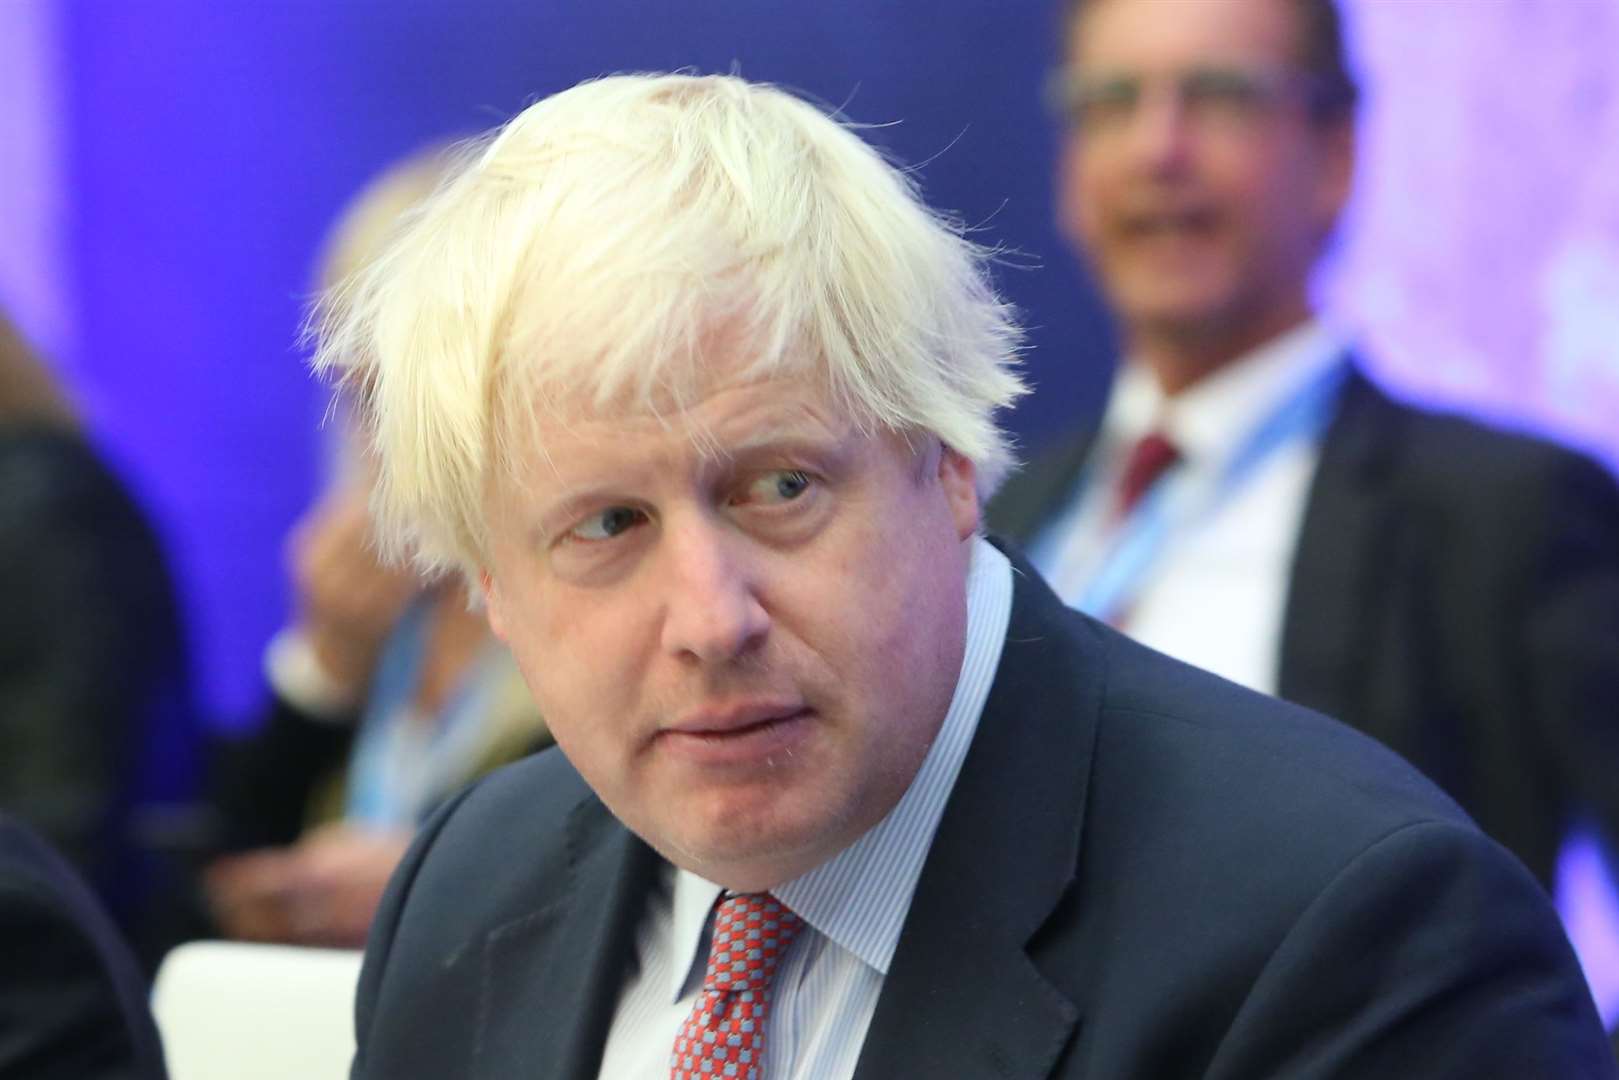 Boris Johnson, then London Mayor, championed the estuary airport idea from 2008